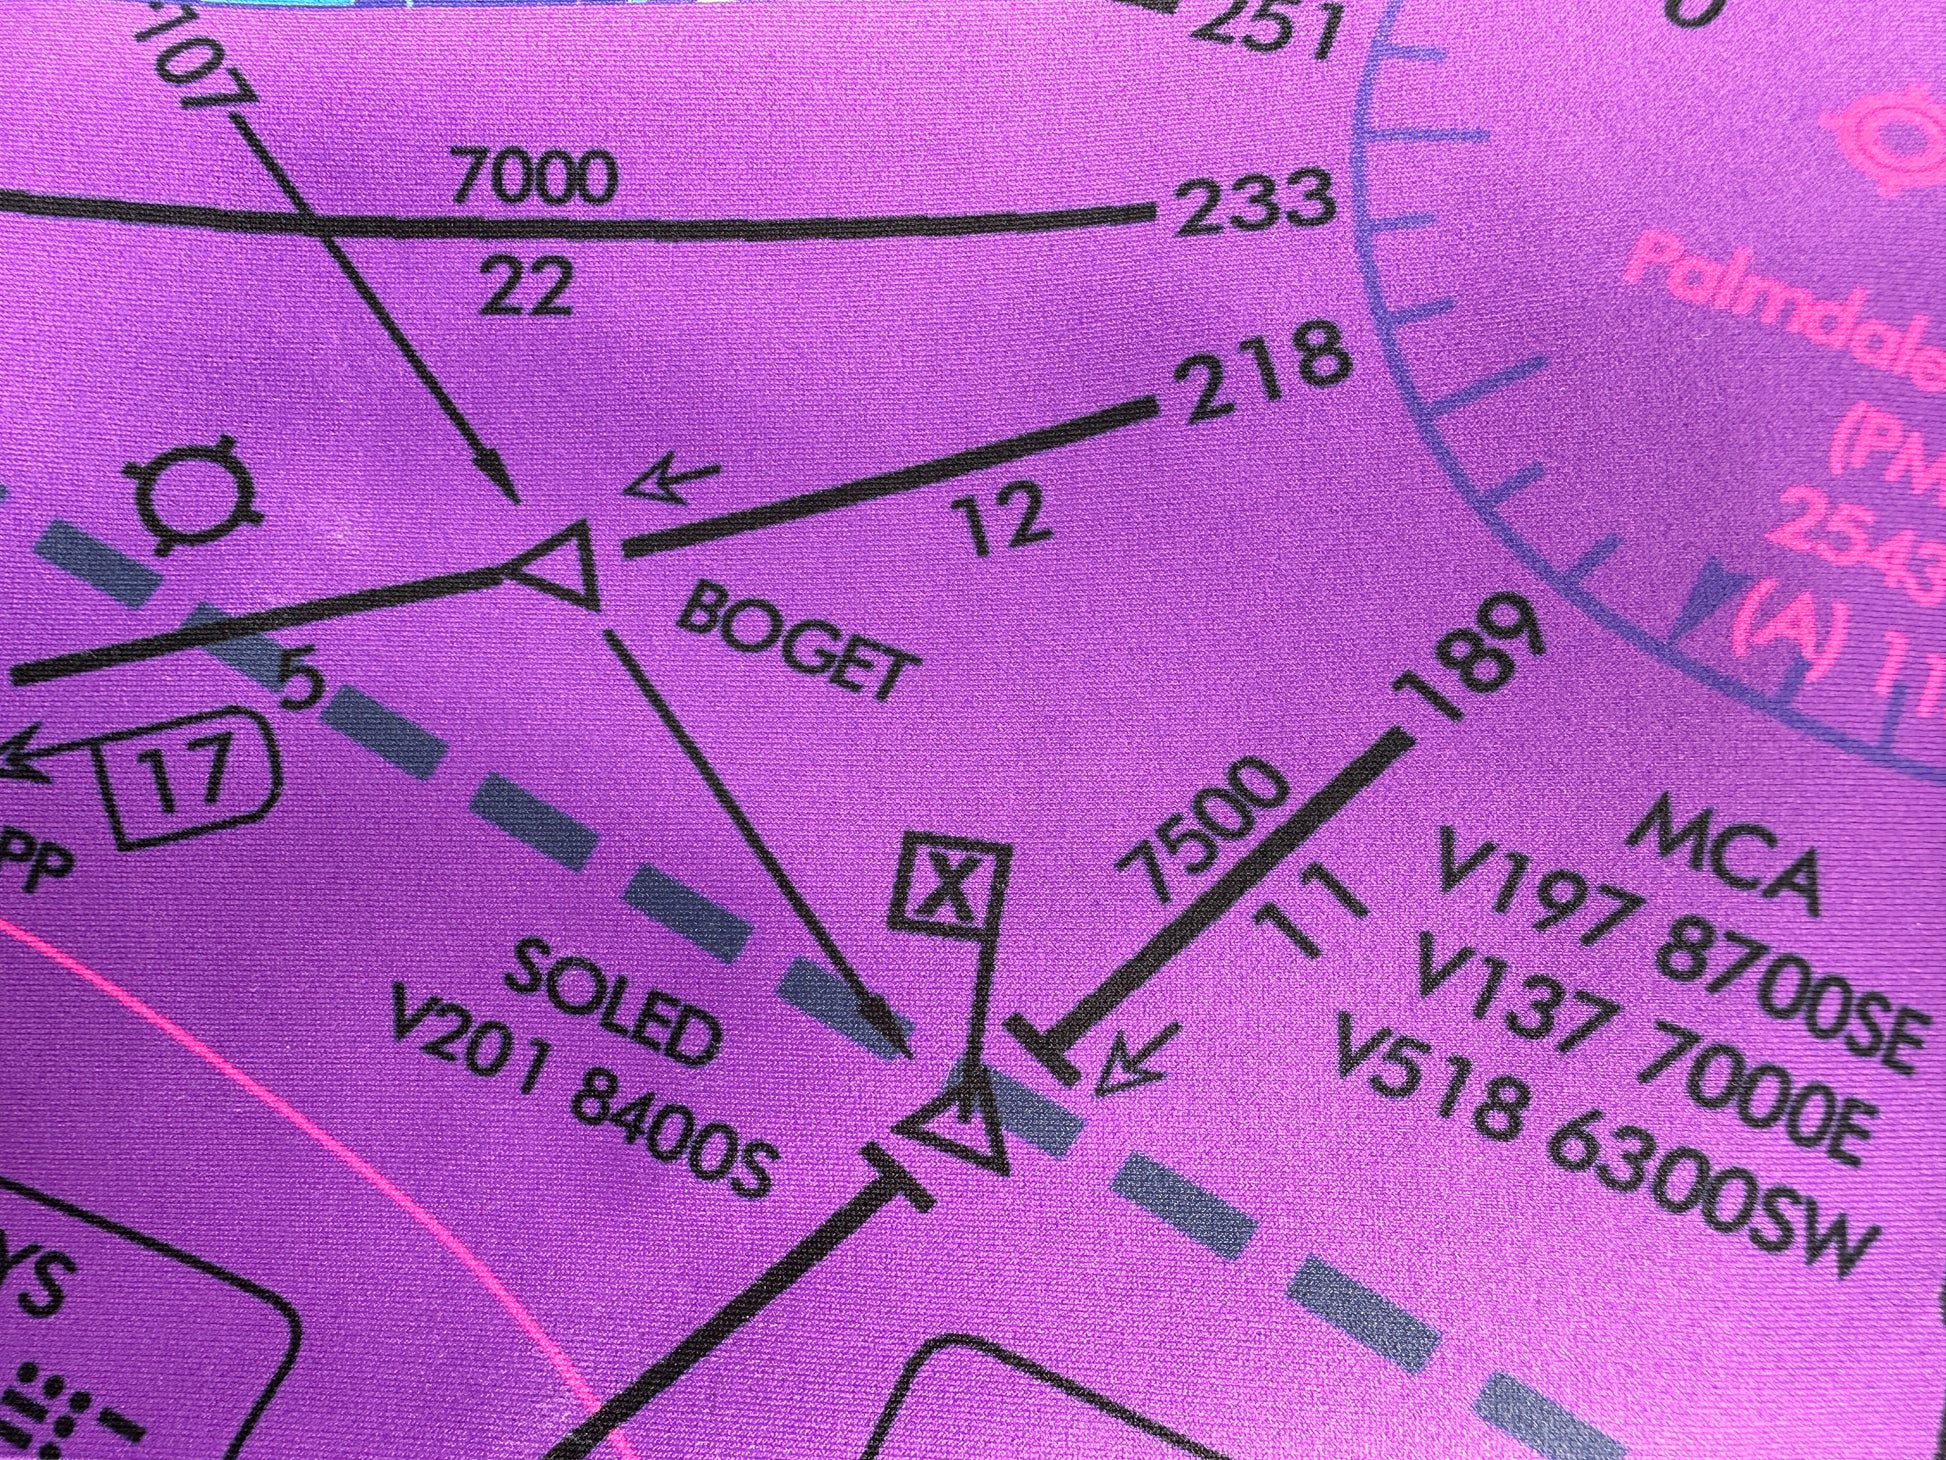 Enroute Low Altitude (ELUS3) Chart leggings (purple)